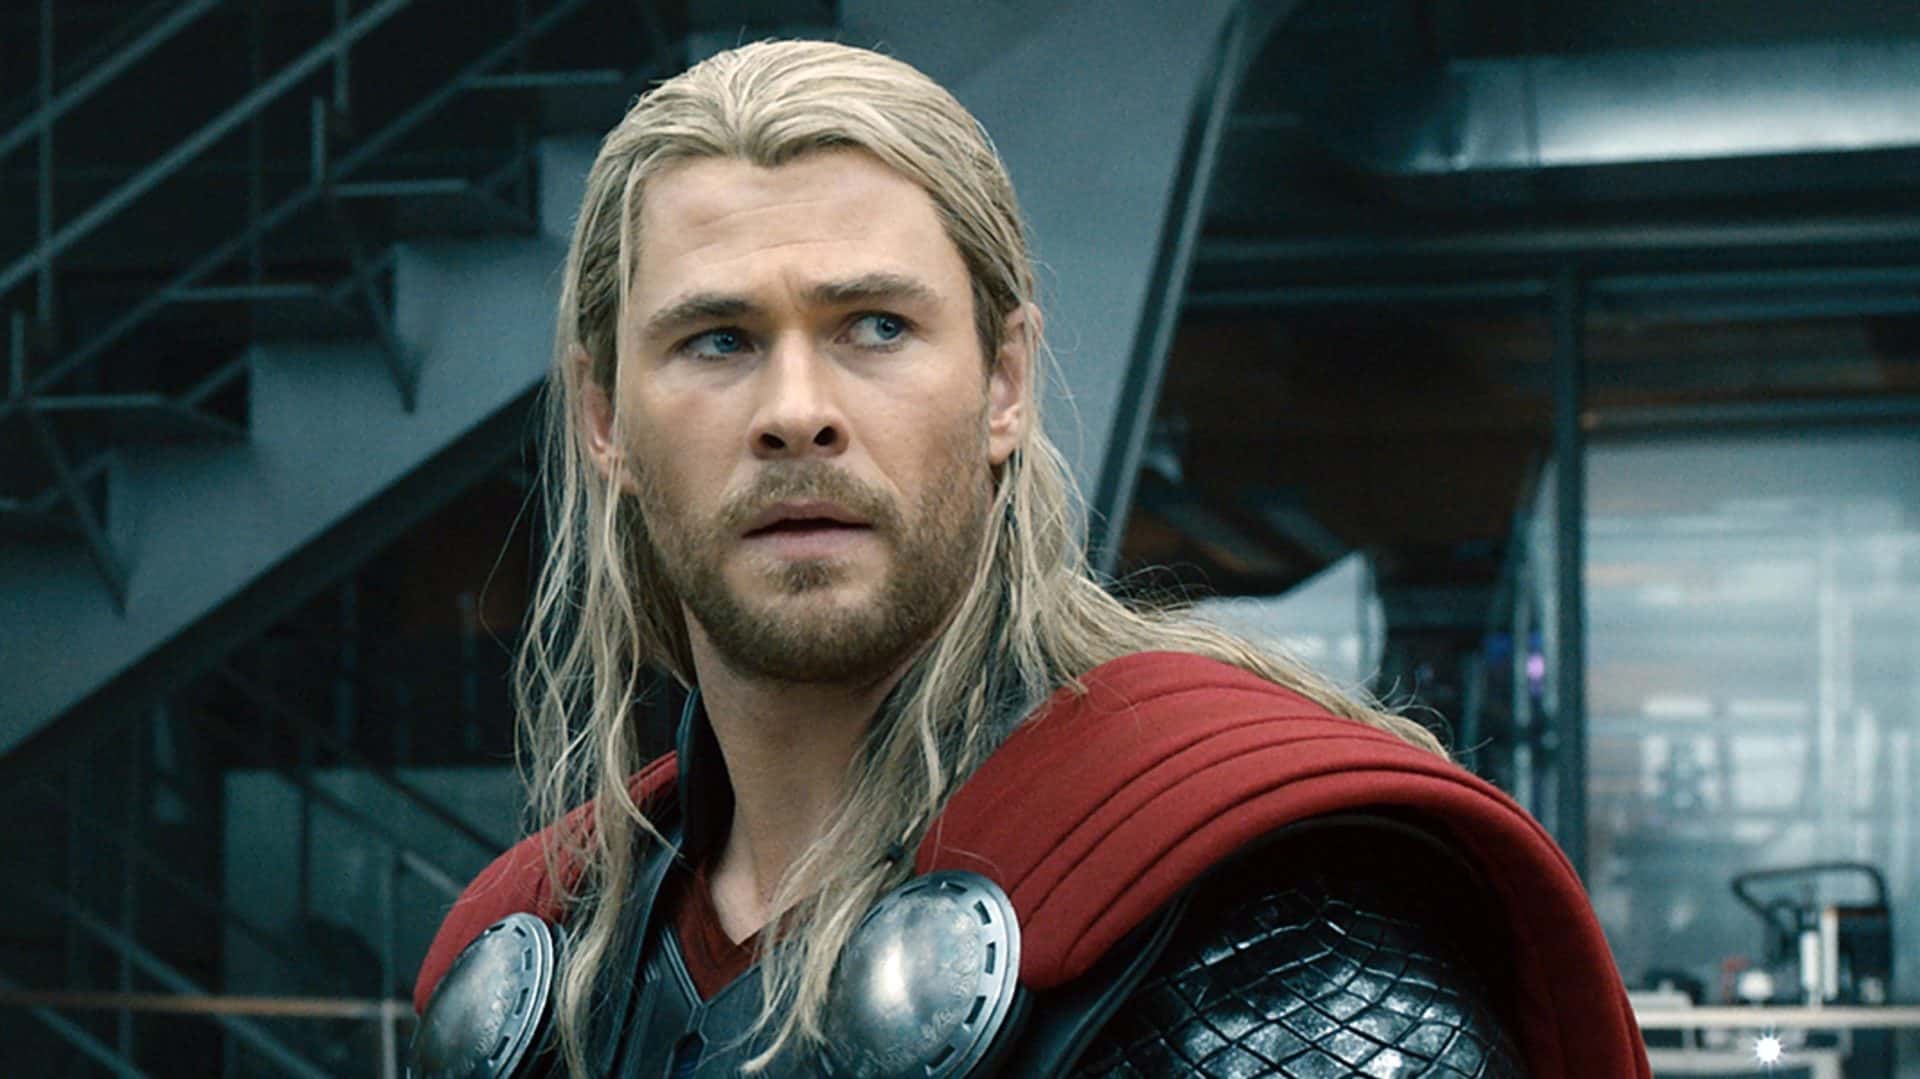 Will Chris Hemsworth returns as Thor